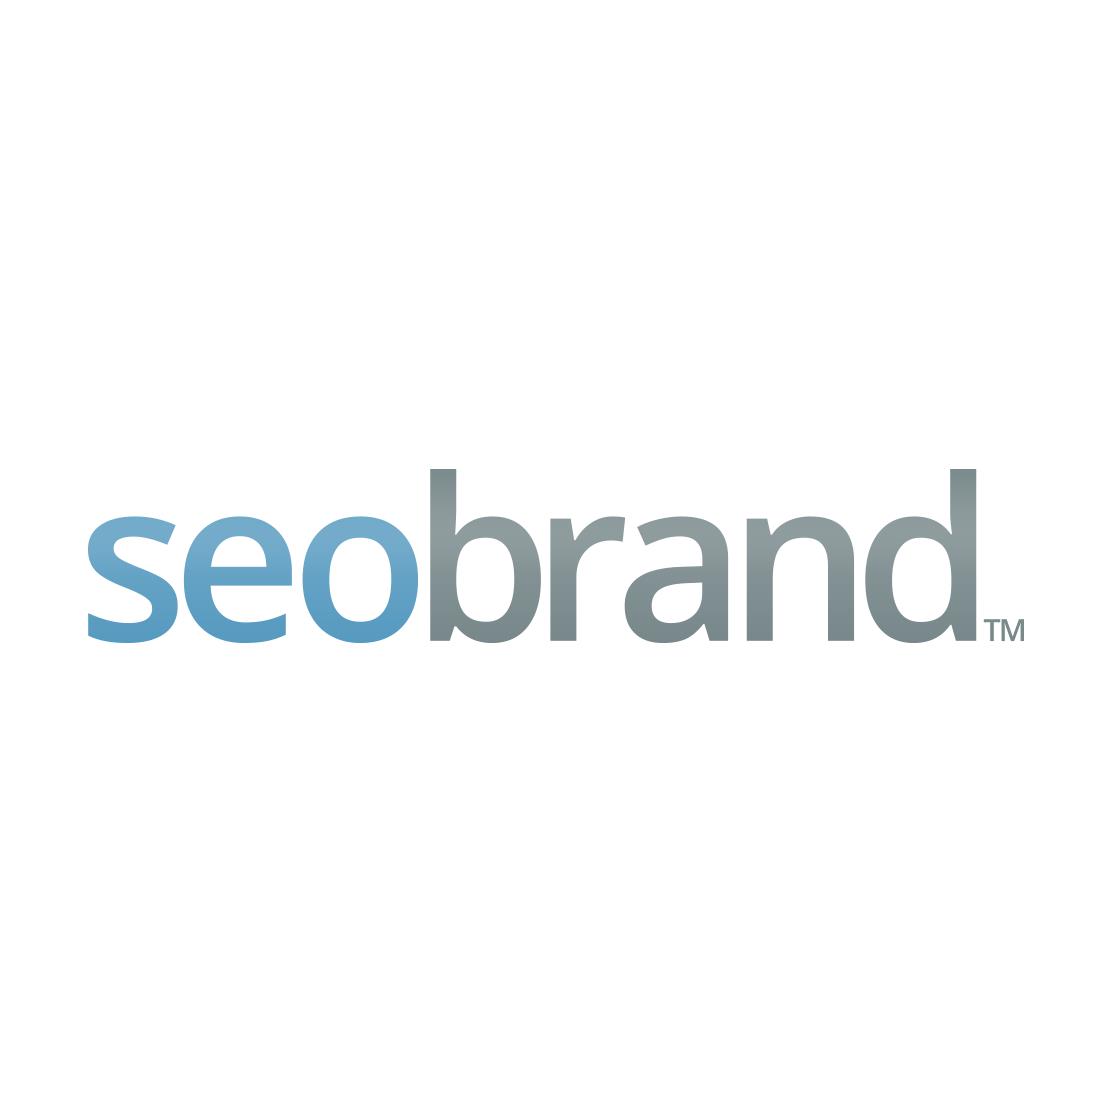 Top New York SEO Firm Logo: SEO Brand